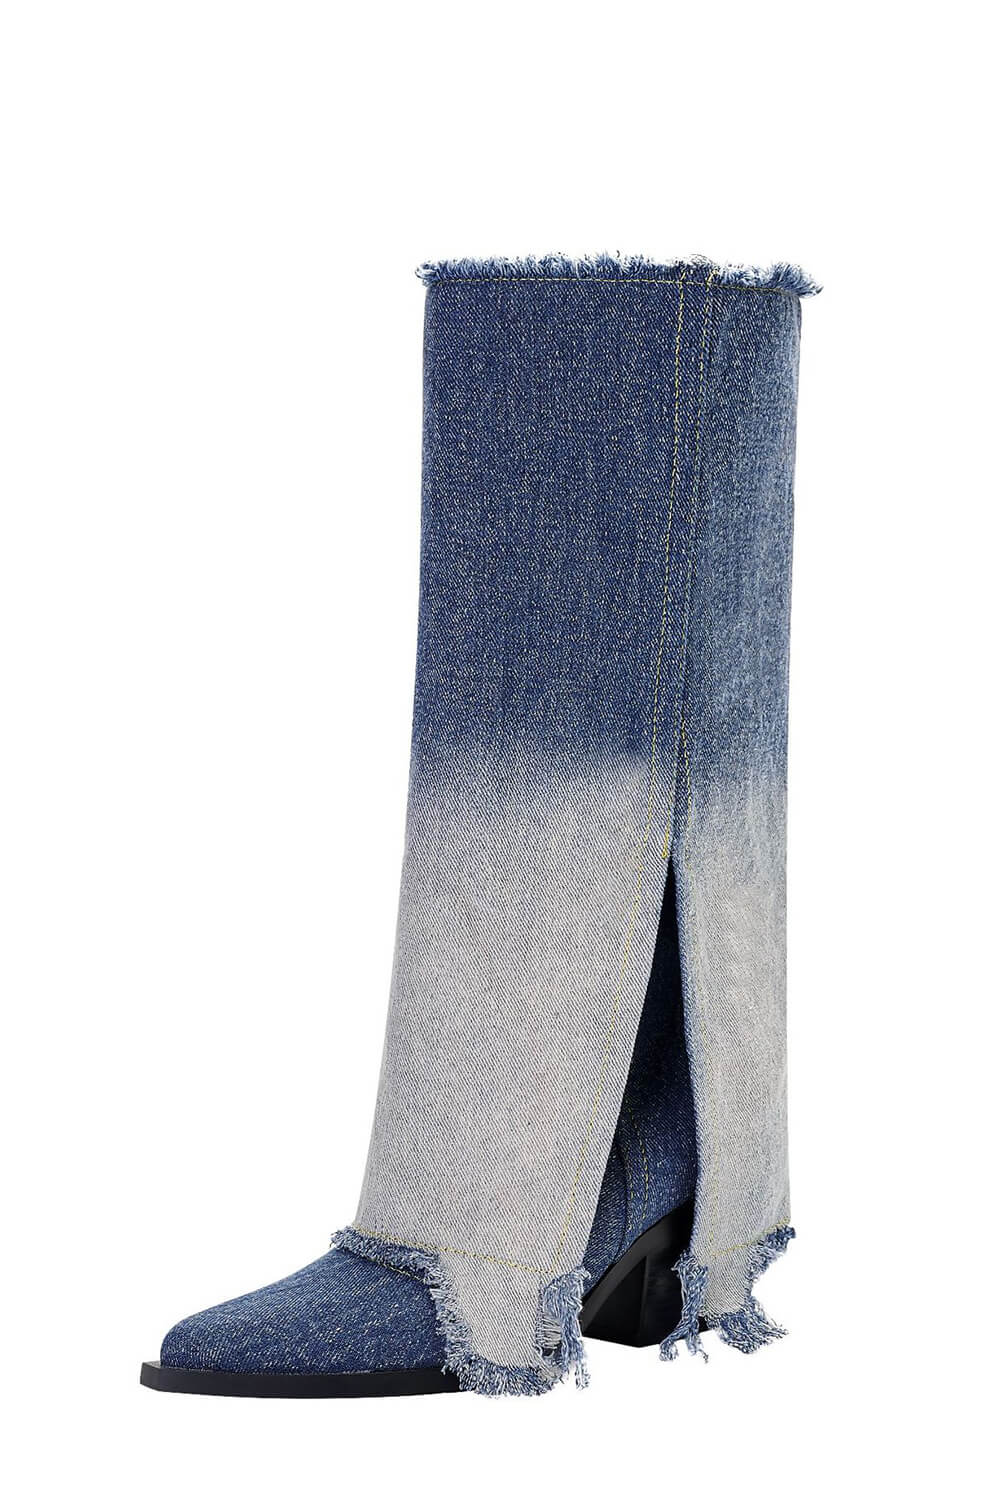 Distressed Denim Fold-Over Cuffed Western Cowboy Knee High Boots